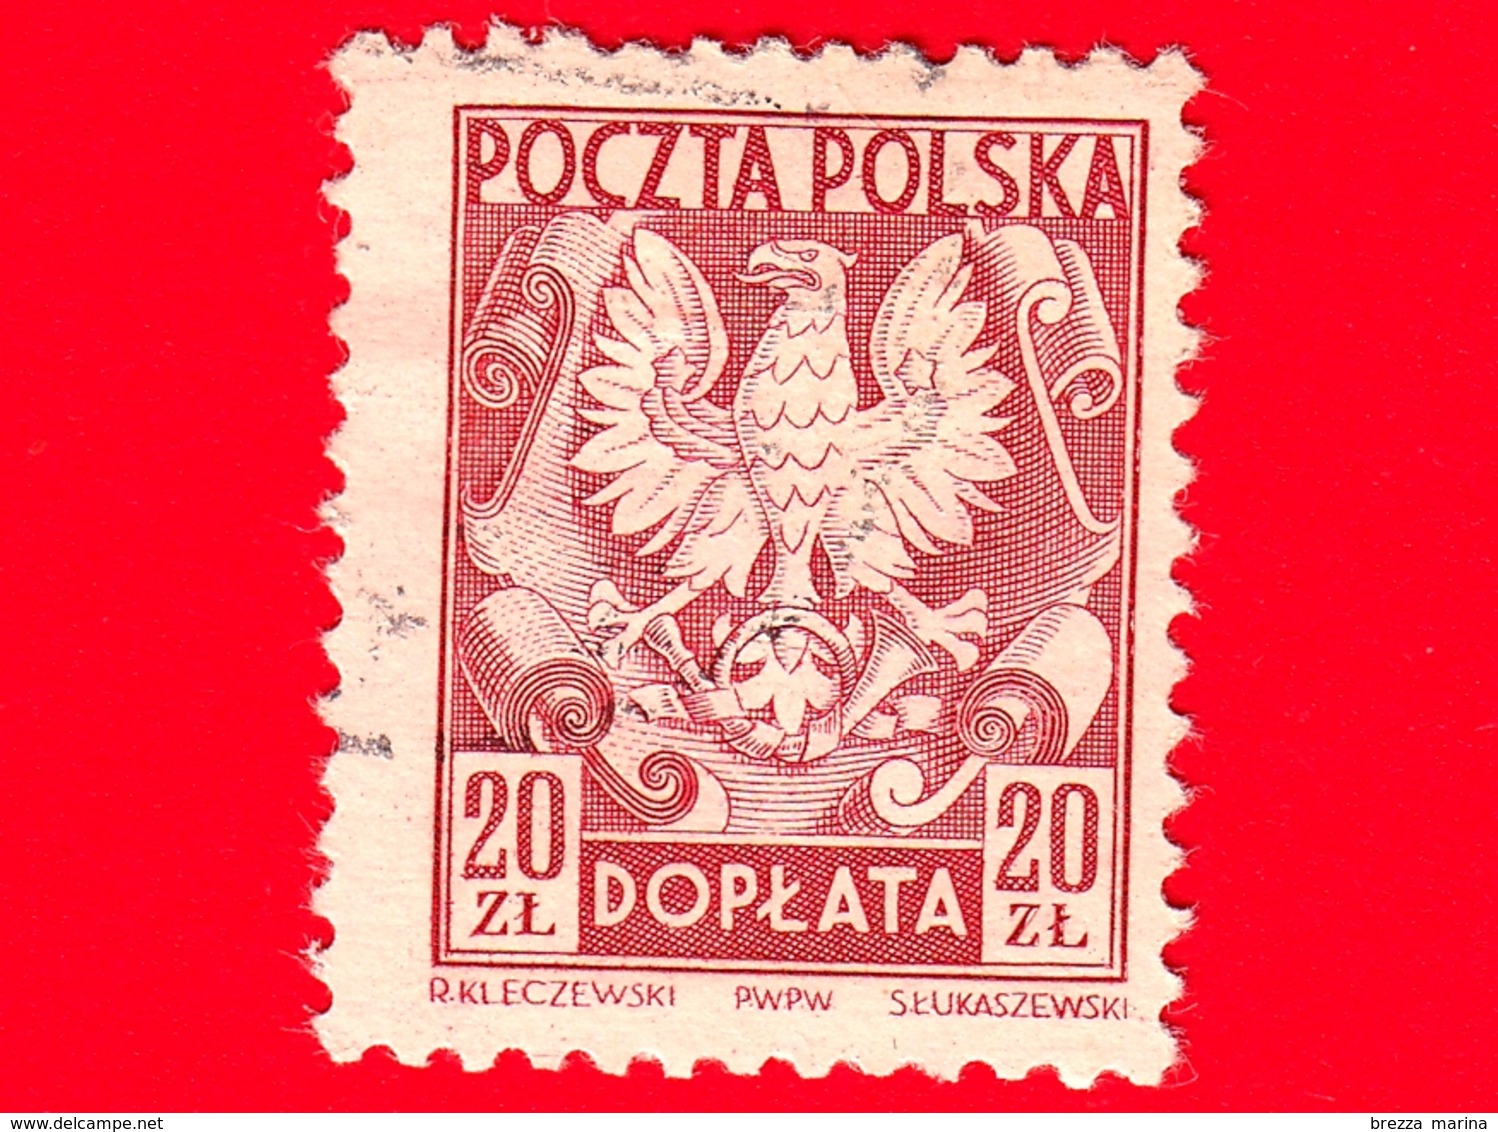 POLONIA - POLSKA - Usato - 1950 - Segnatasse - Taxe - Aquila - Coat Of Arms Of Poland - 20 - Postage Due